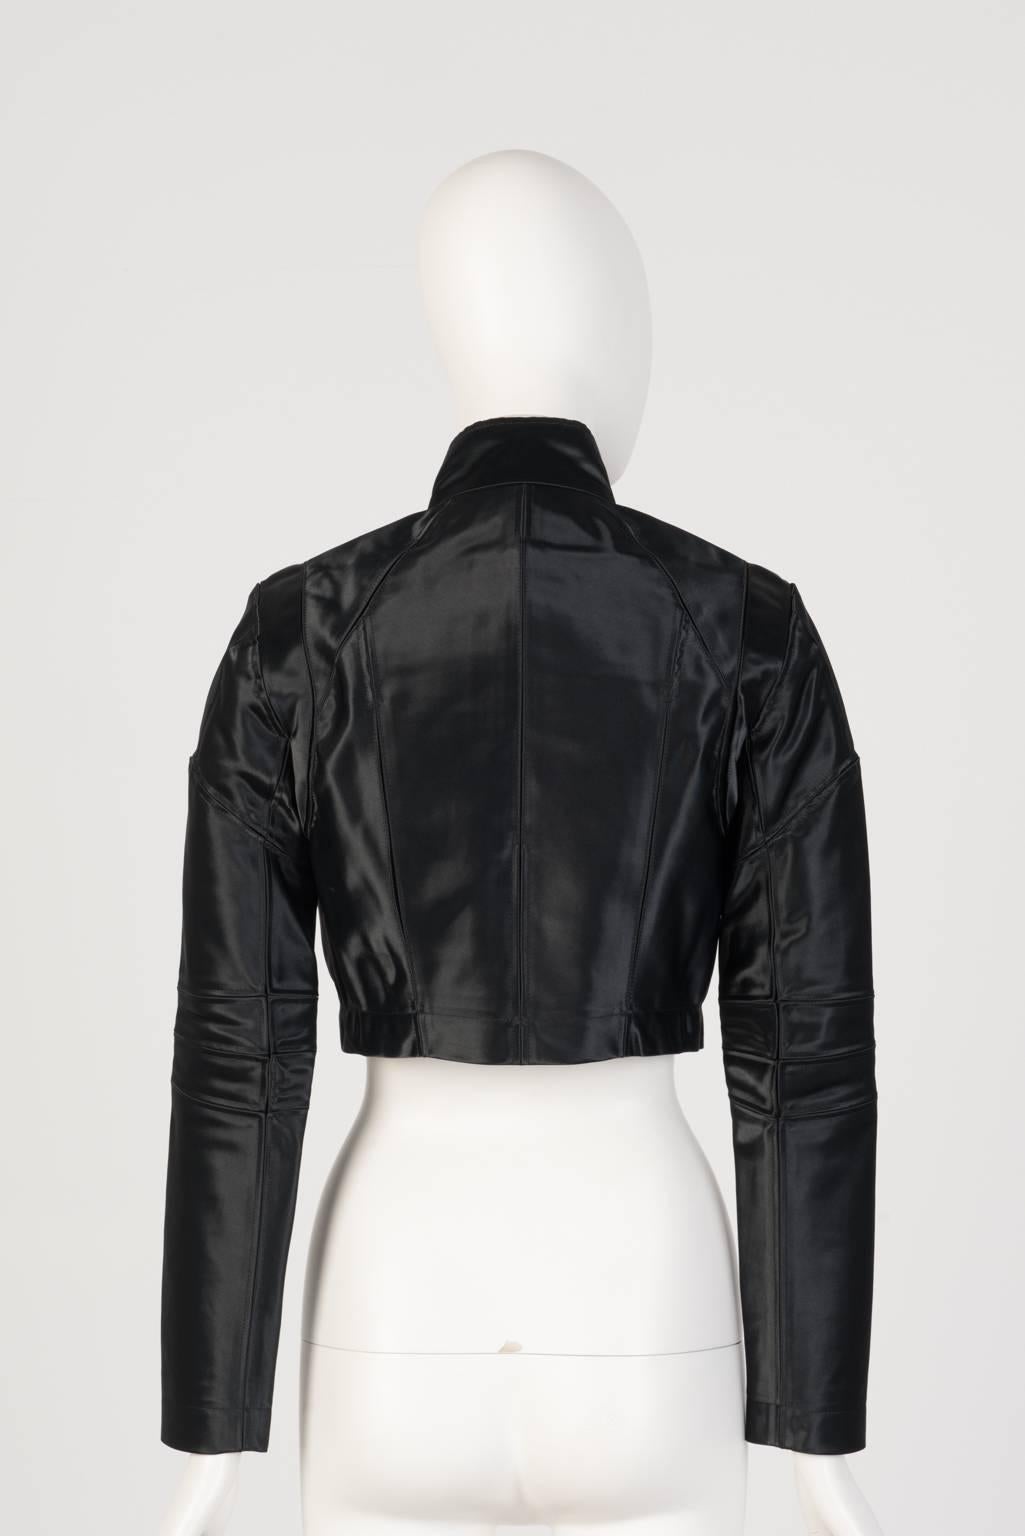 Comme Des Garçons Constructed jacket For Sale 1